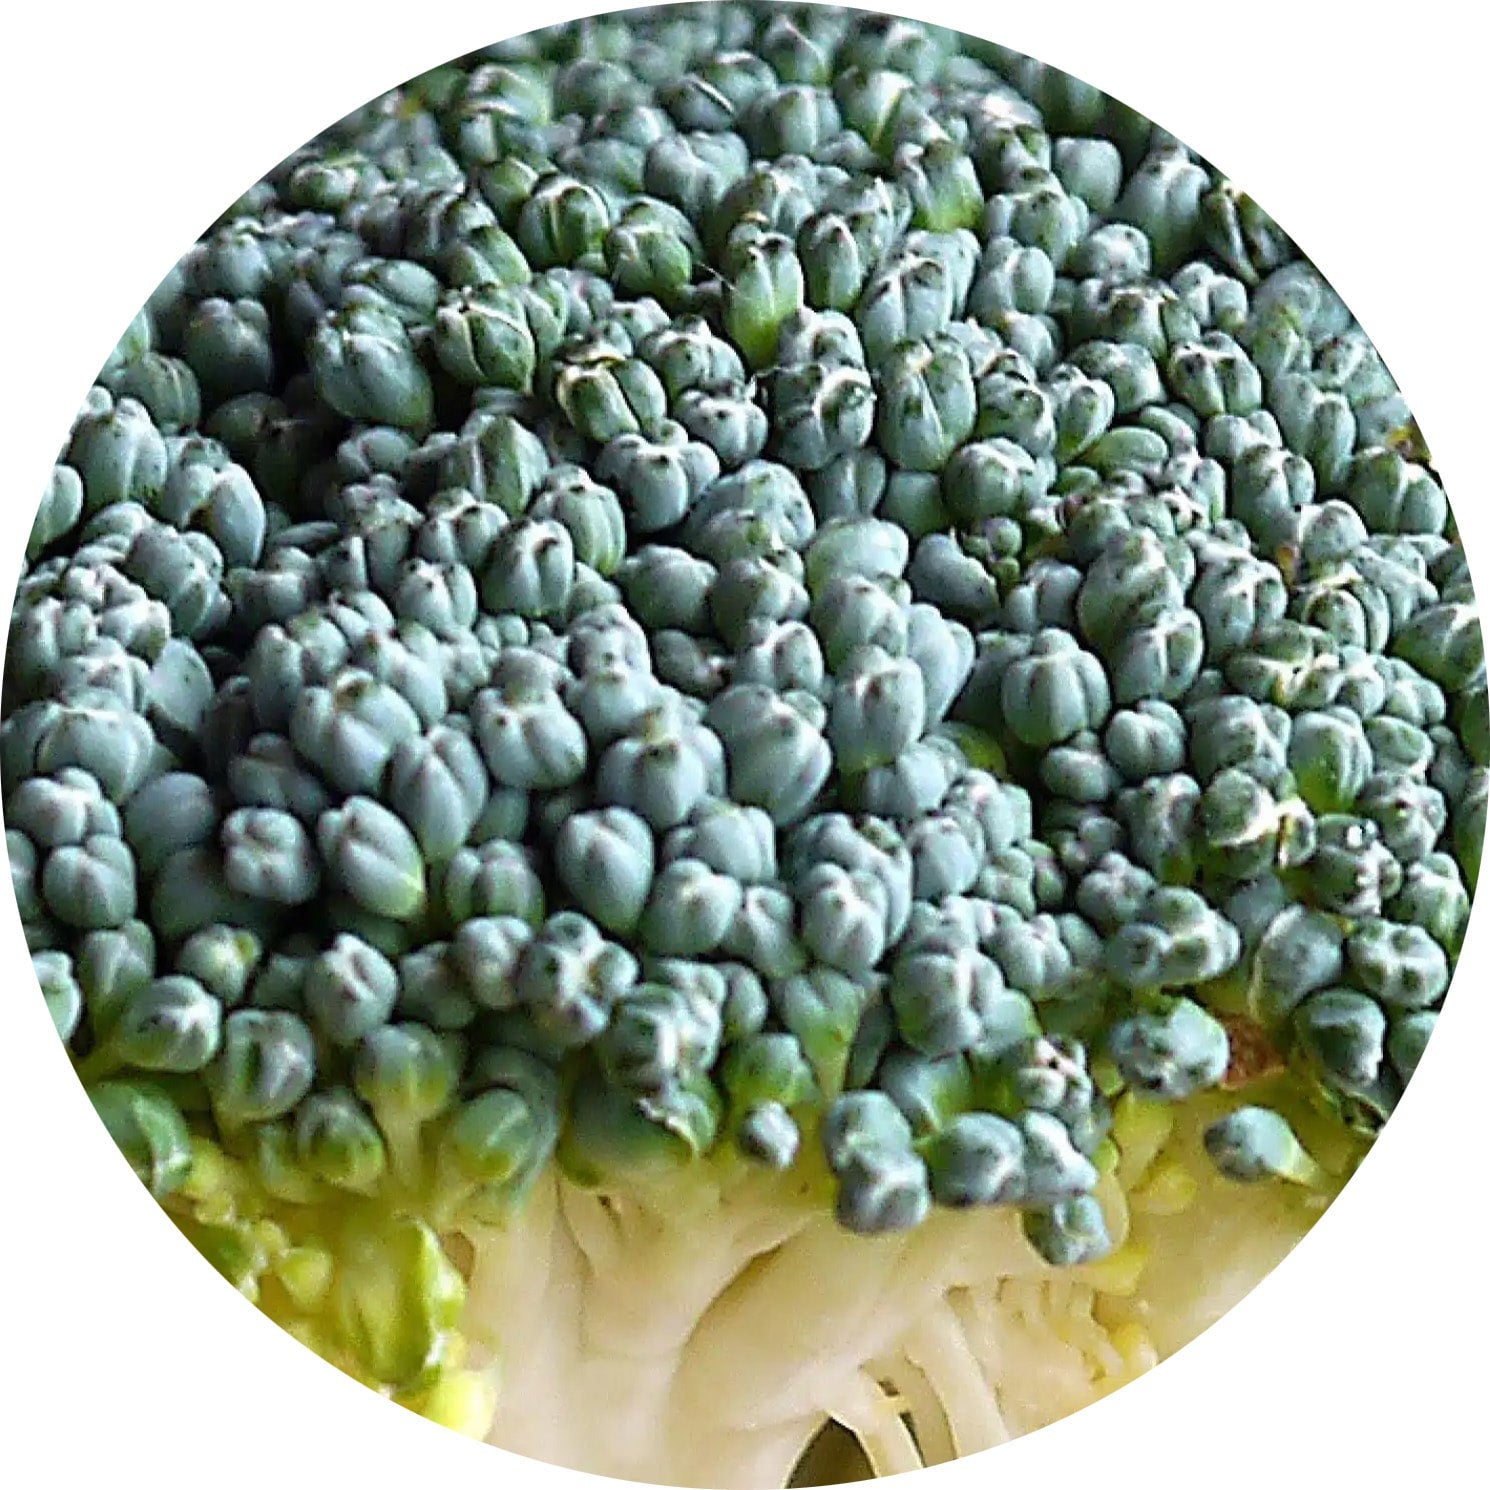 close up photo of broccoli florets